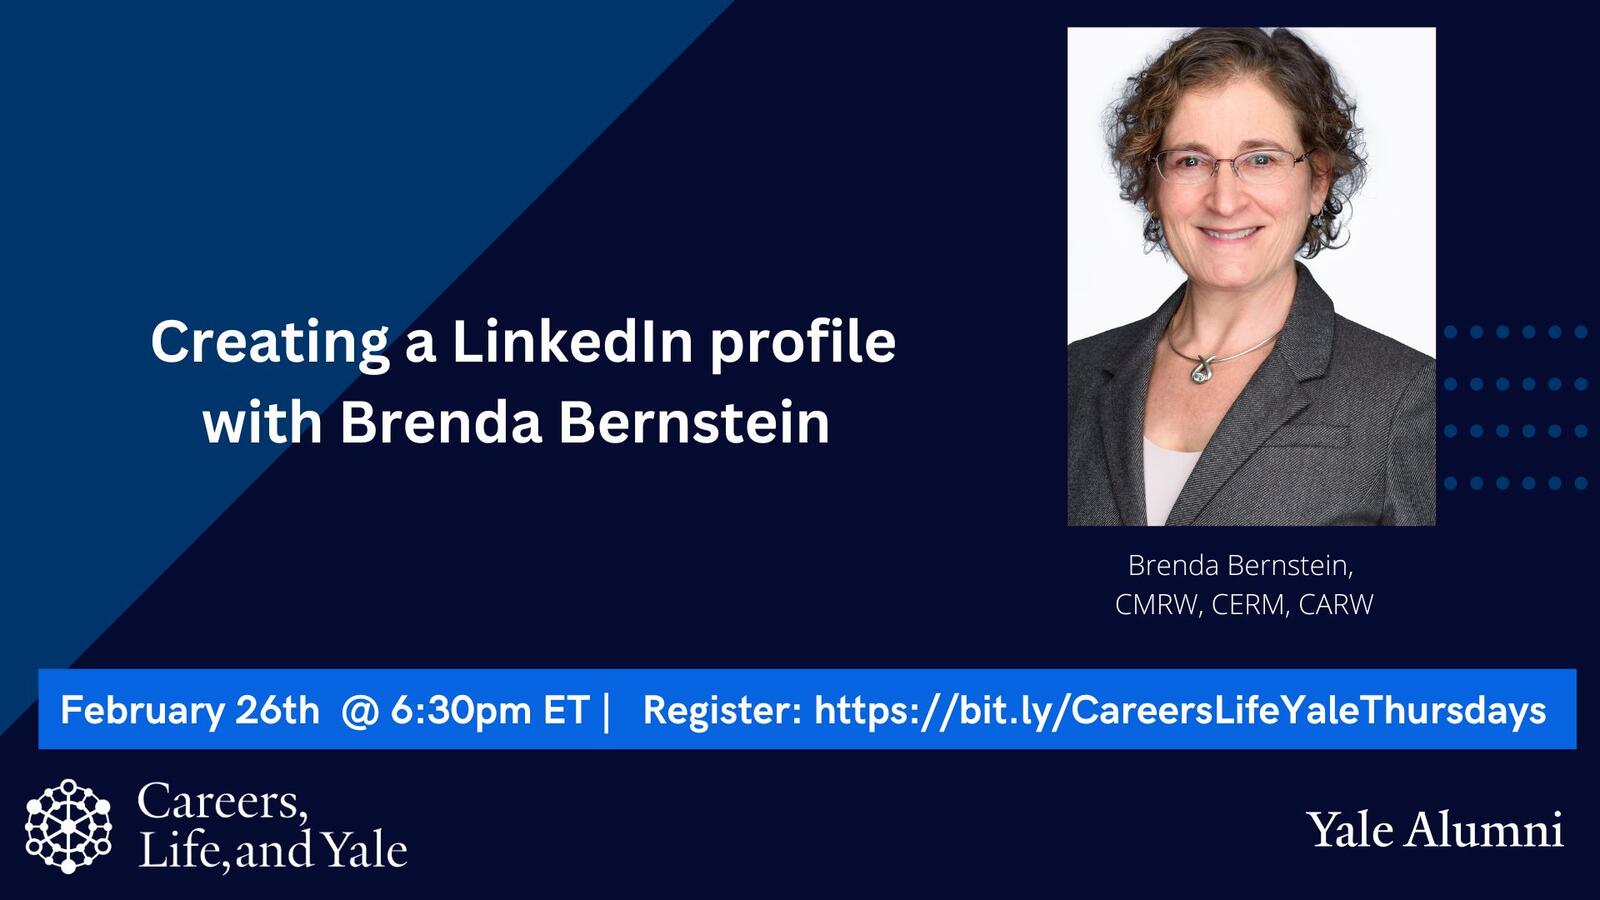 Creating a LinkedIn profile with Brenda Bernstein